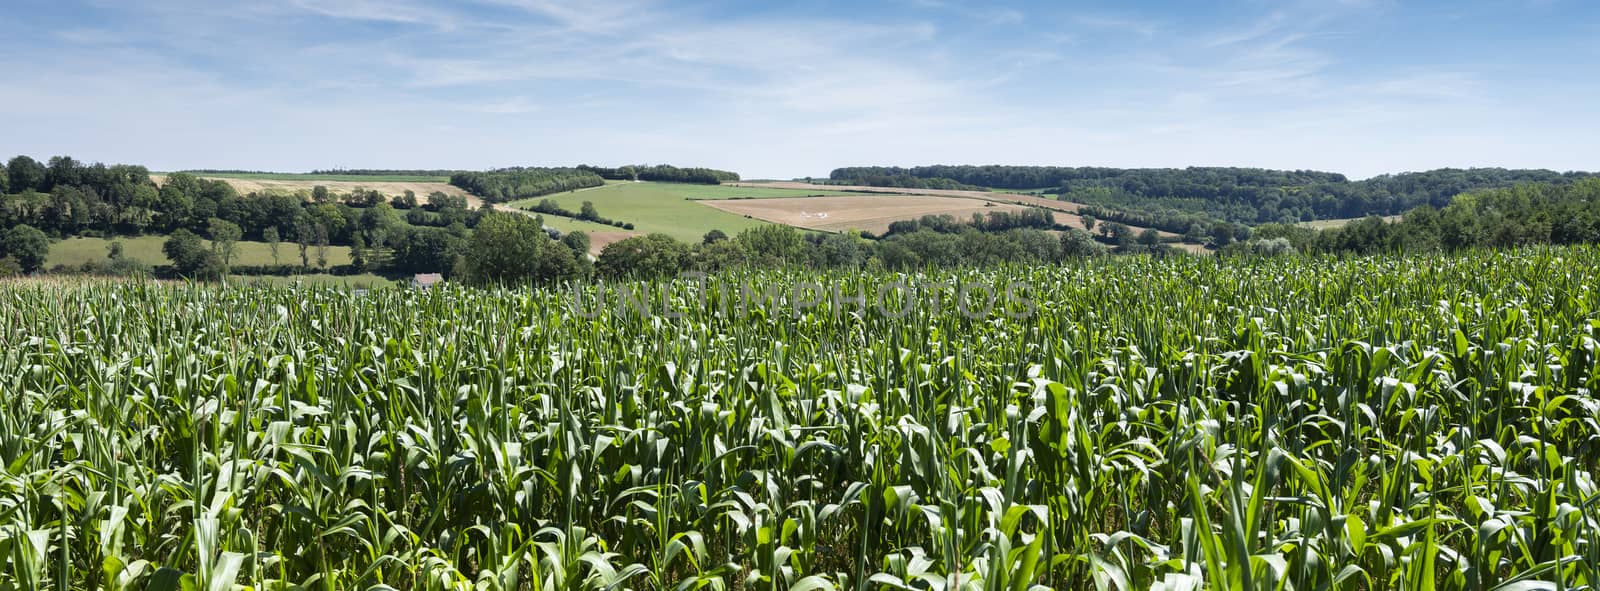 cornfields and meadows under blue sky in french pas de calais near boulogne by ahavelaar